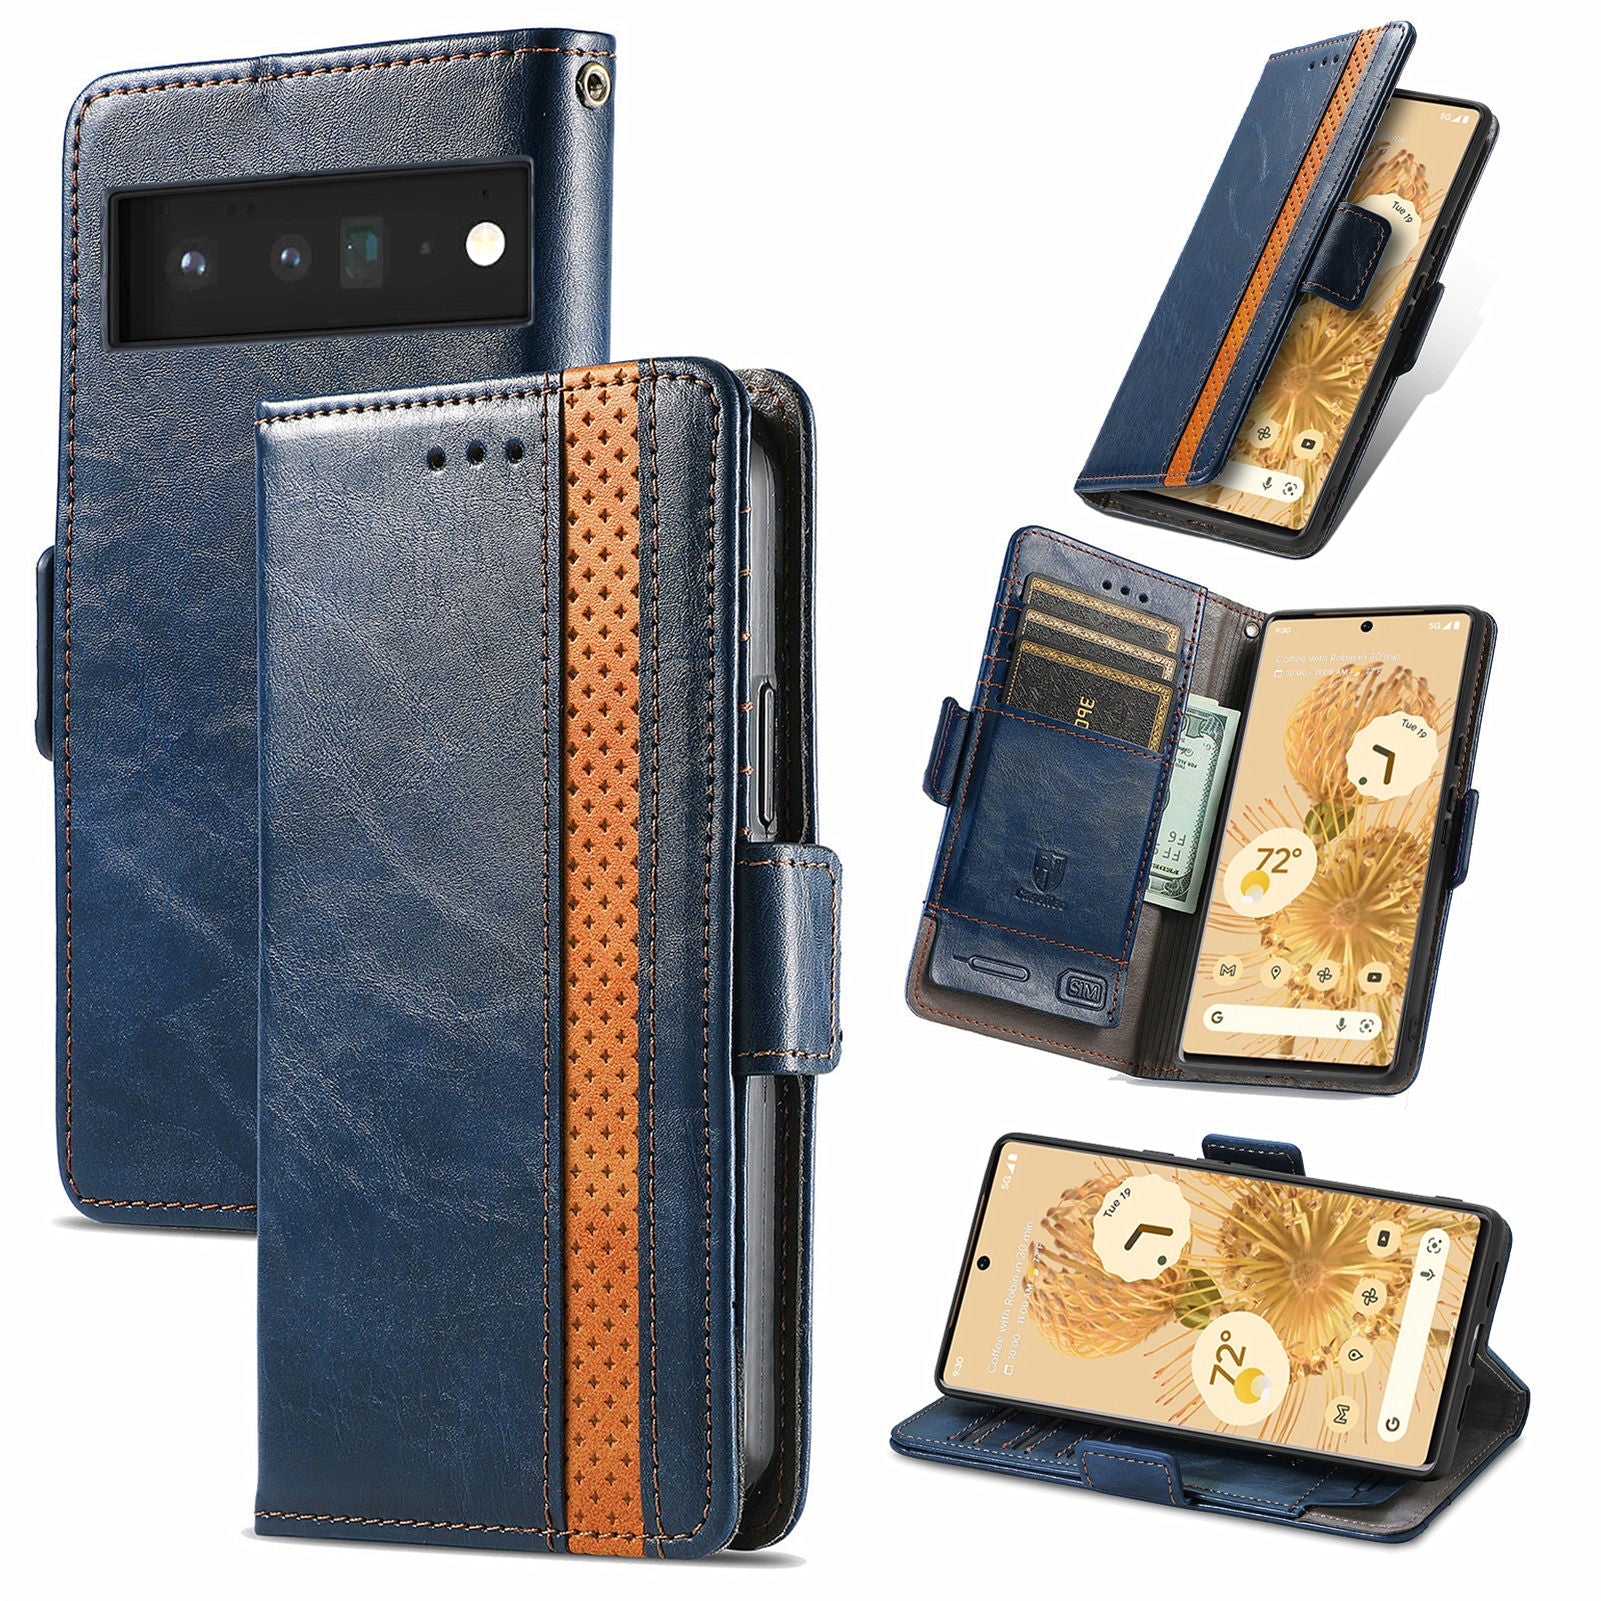 Premium Faux Leather Wallet Google Pixel Case - Electronics Accessories - ChunkCase